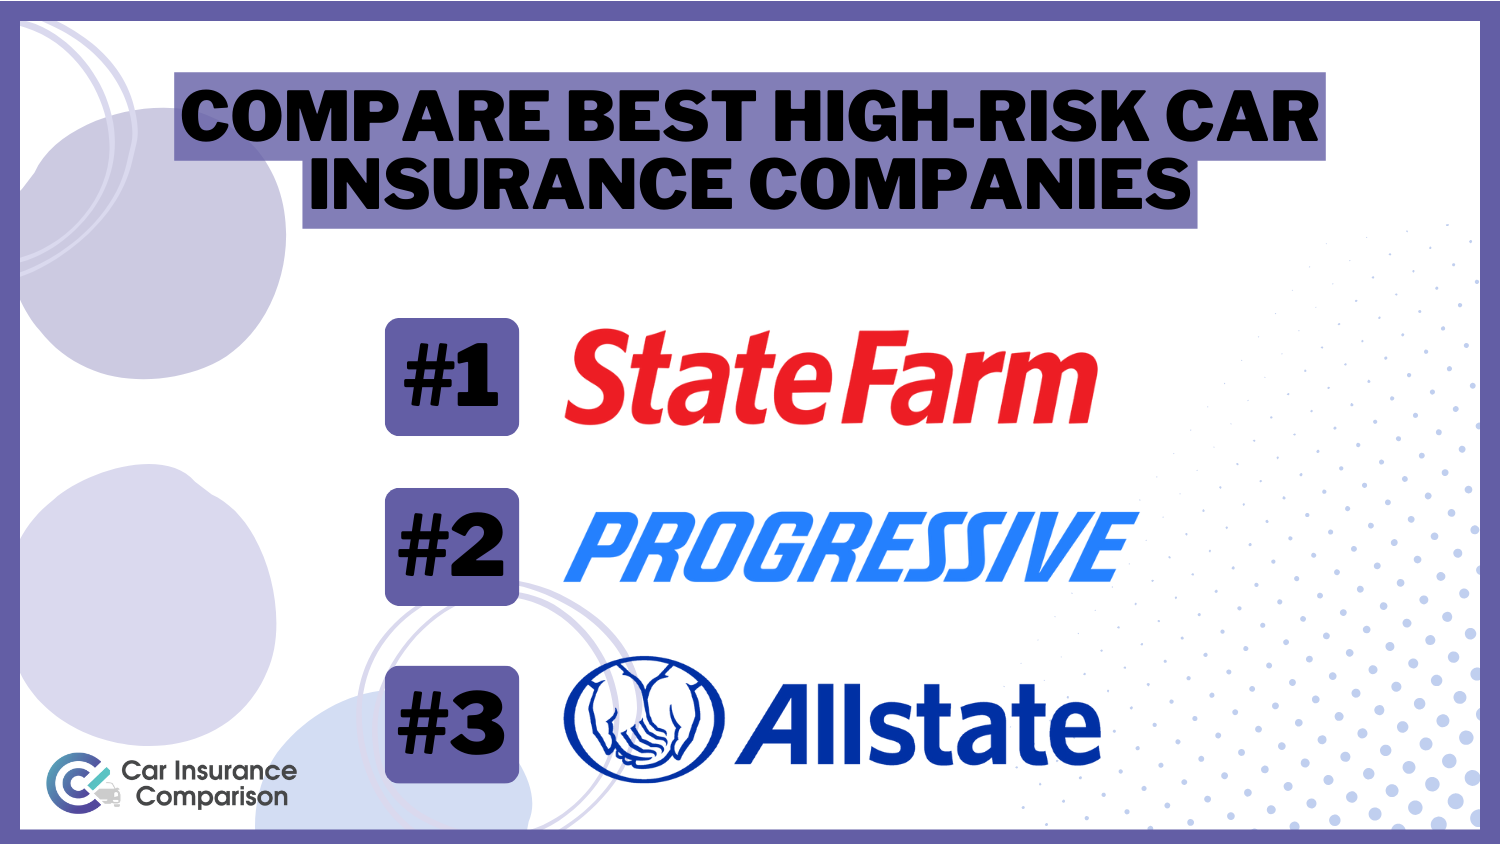 Compare Best High-Risk Car Insurance Companies: Statefarm, Progressive and Allstate